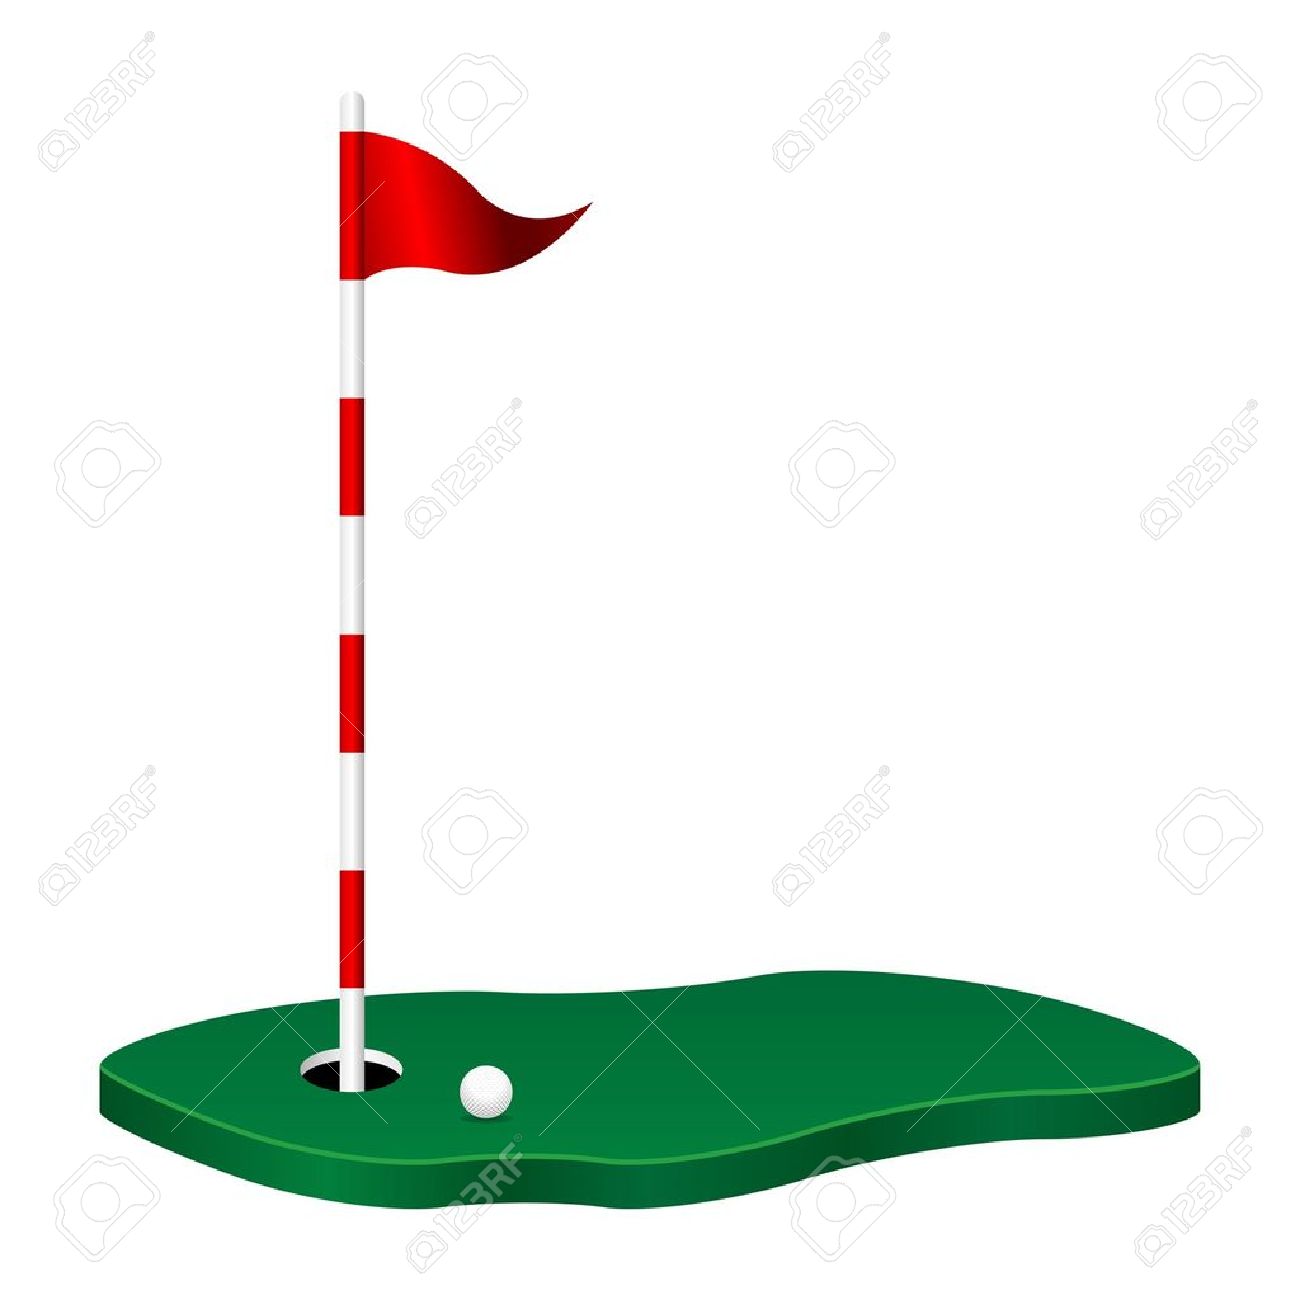 golf flag: Golf theme with green flag pole and ball